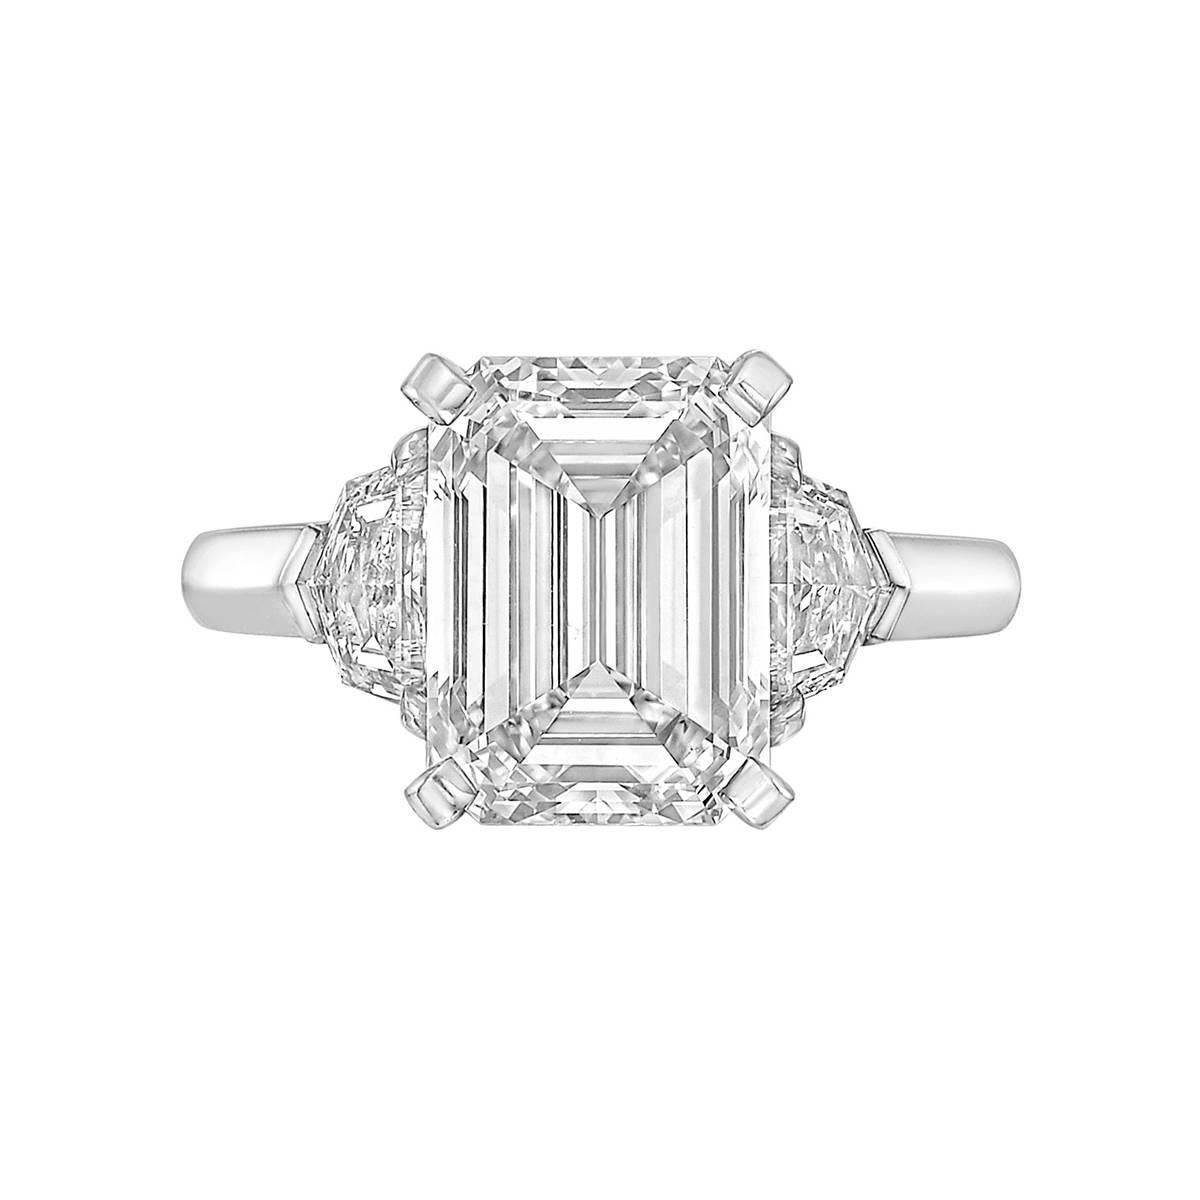 Betteridge GIA Report 4.11 Carat Emerald-Cut Diamond Engagement Ring